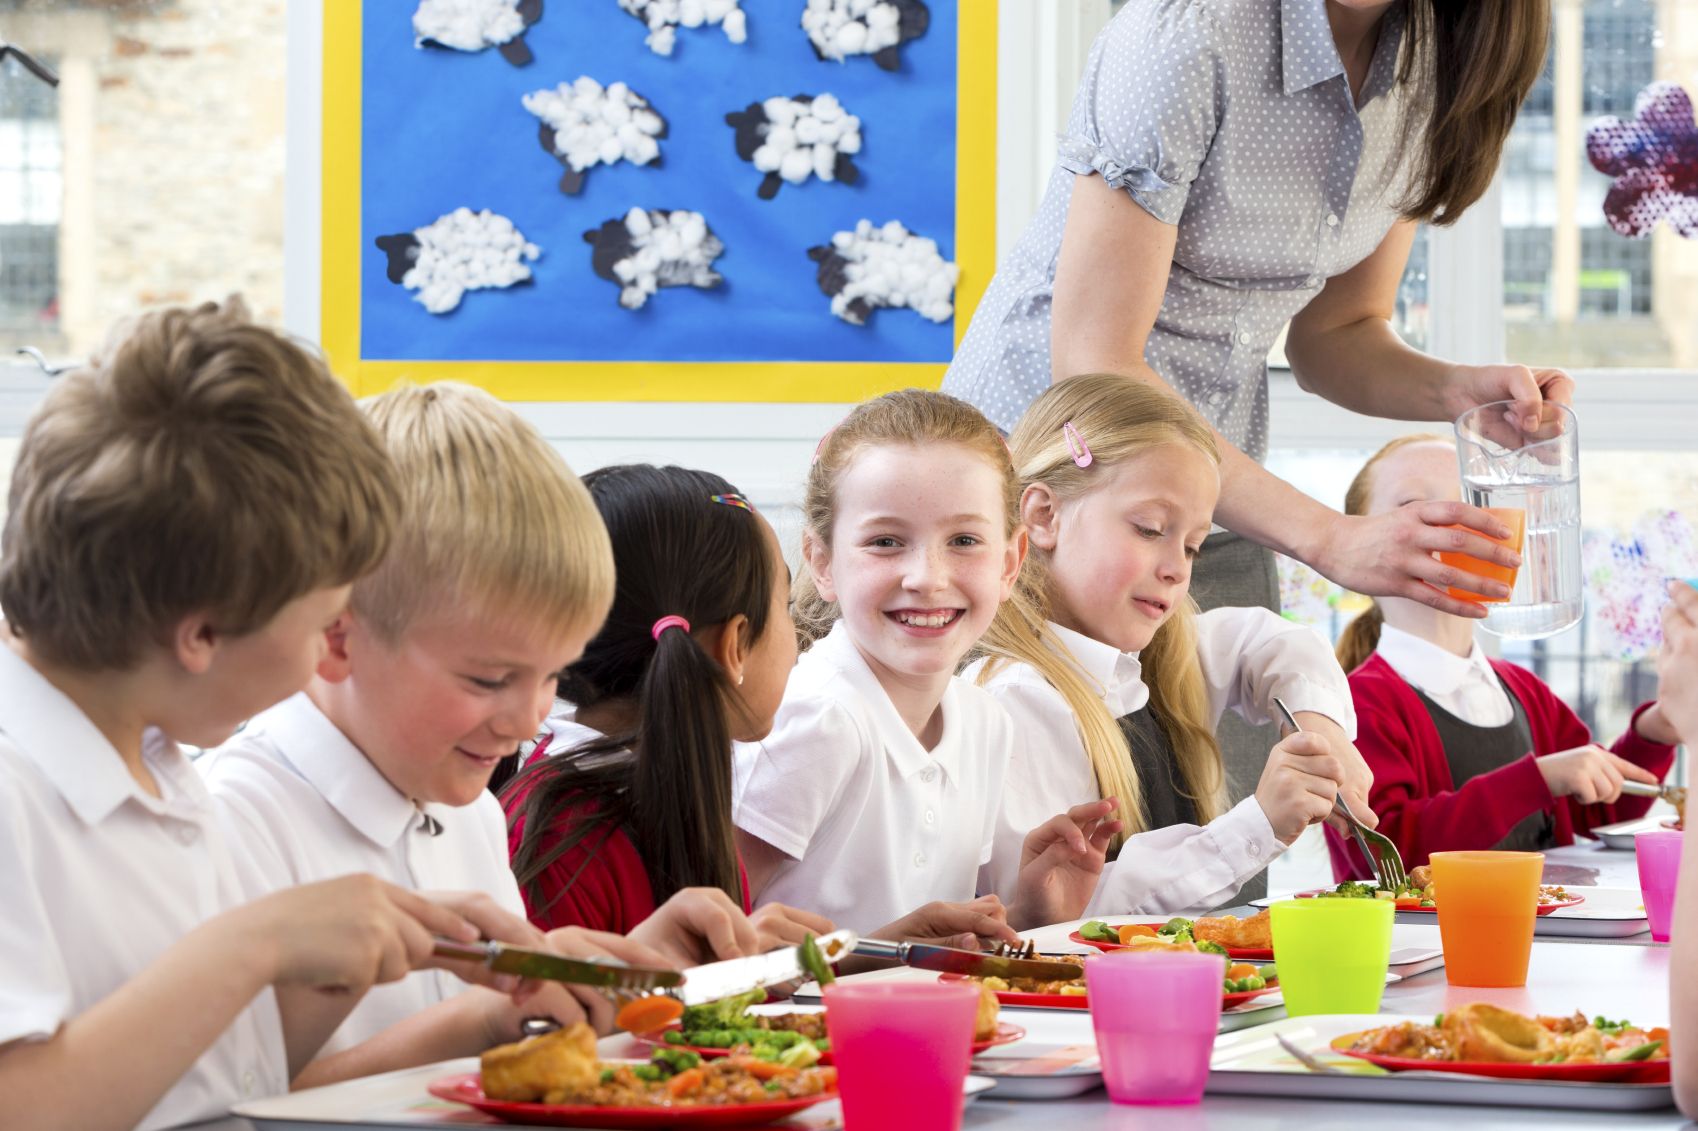 Tackling unhealthy lifestyles at the schools